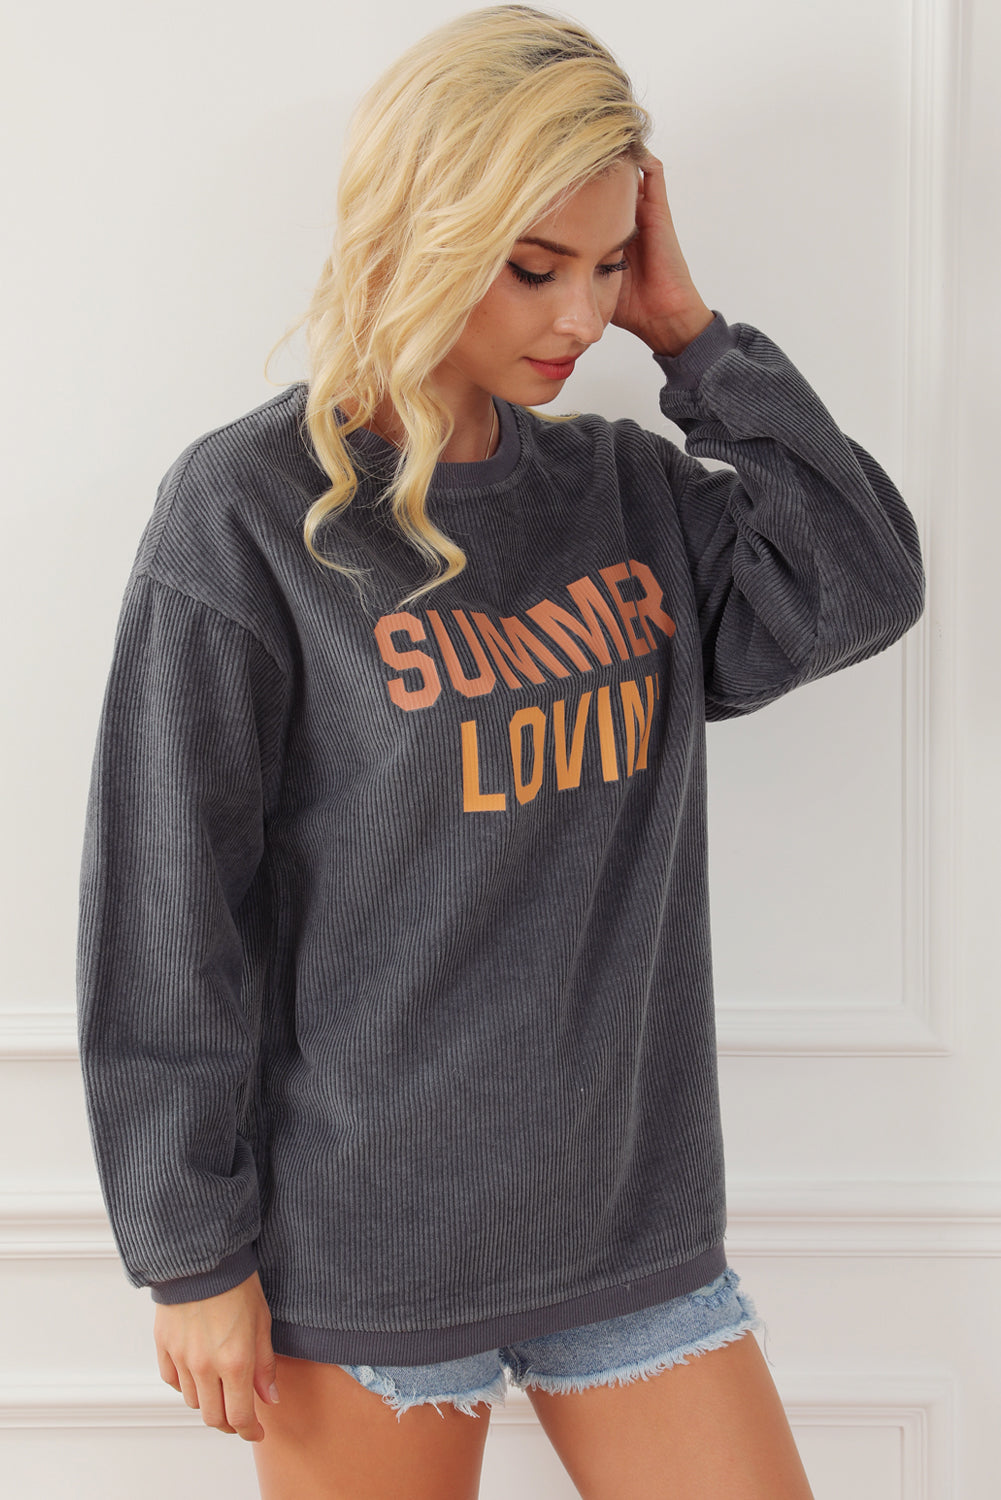 Gray SUMMER LOVIN Graphic Textured Pullover Sweatshirt